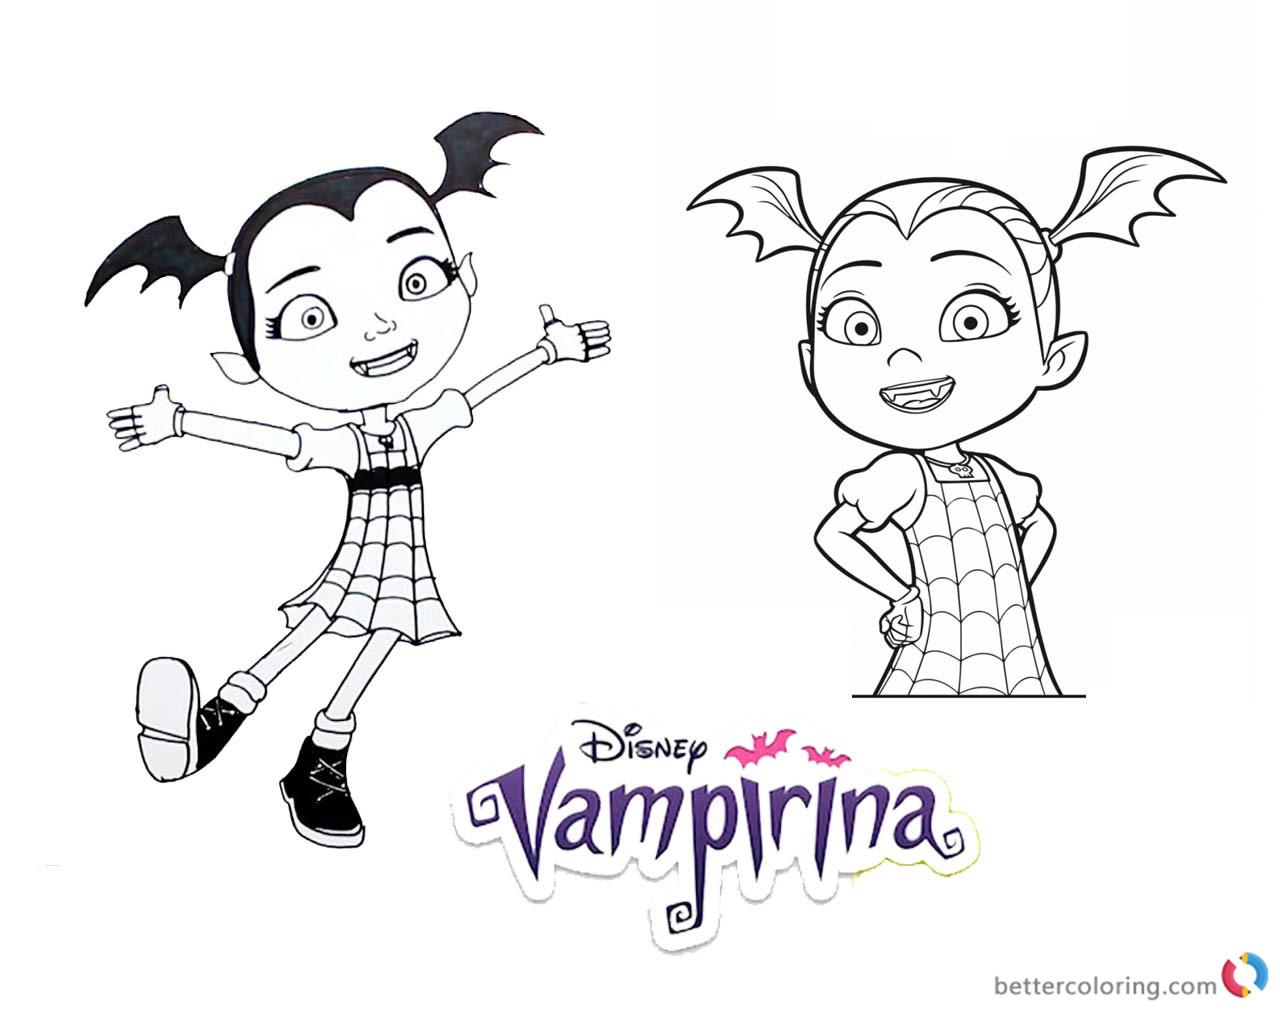 Vampirina is a children's animated computer animated musical televisio...